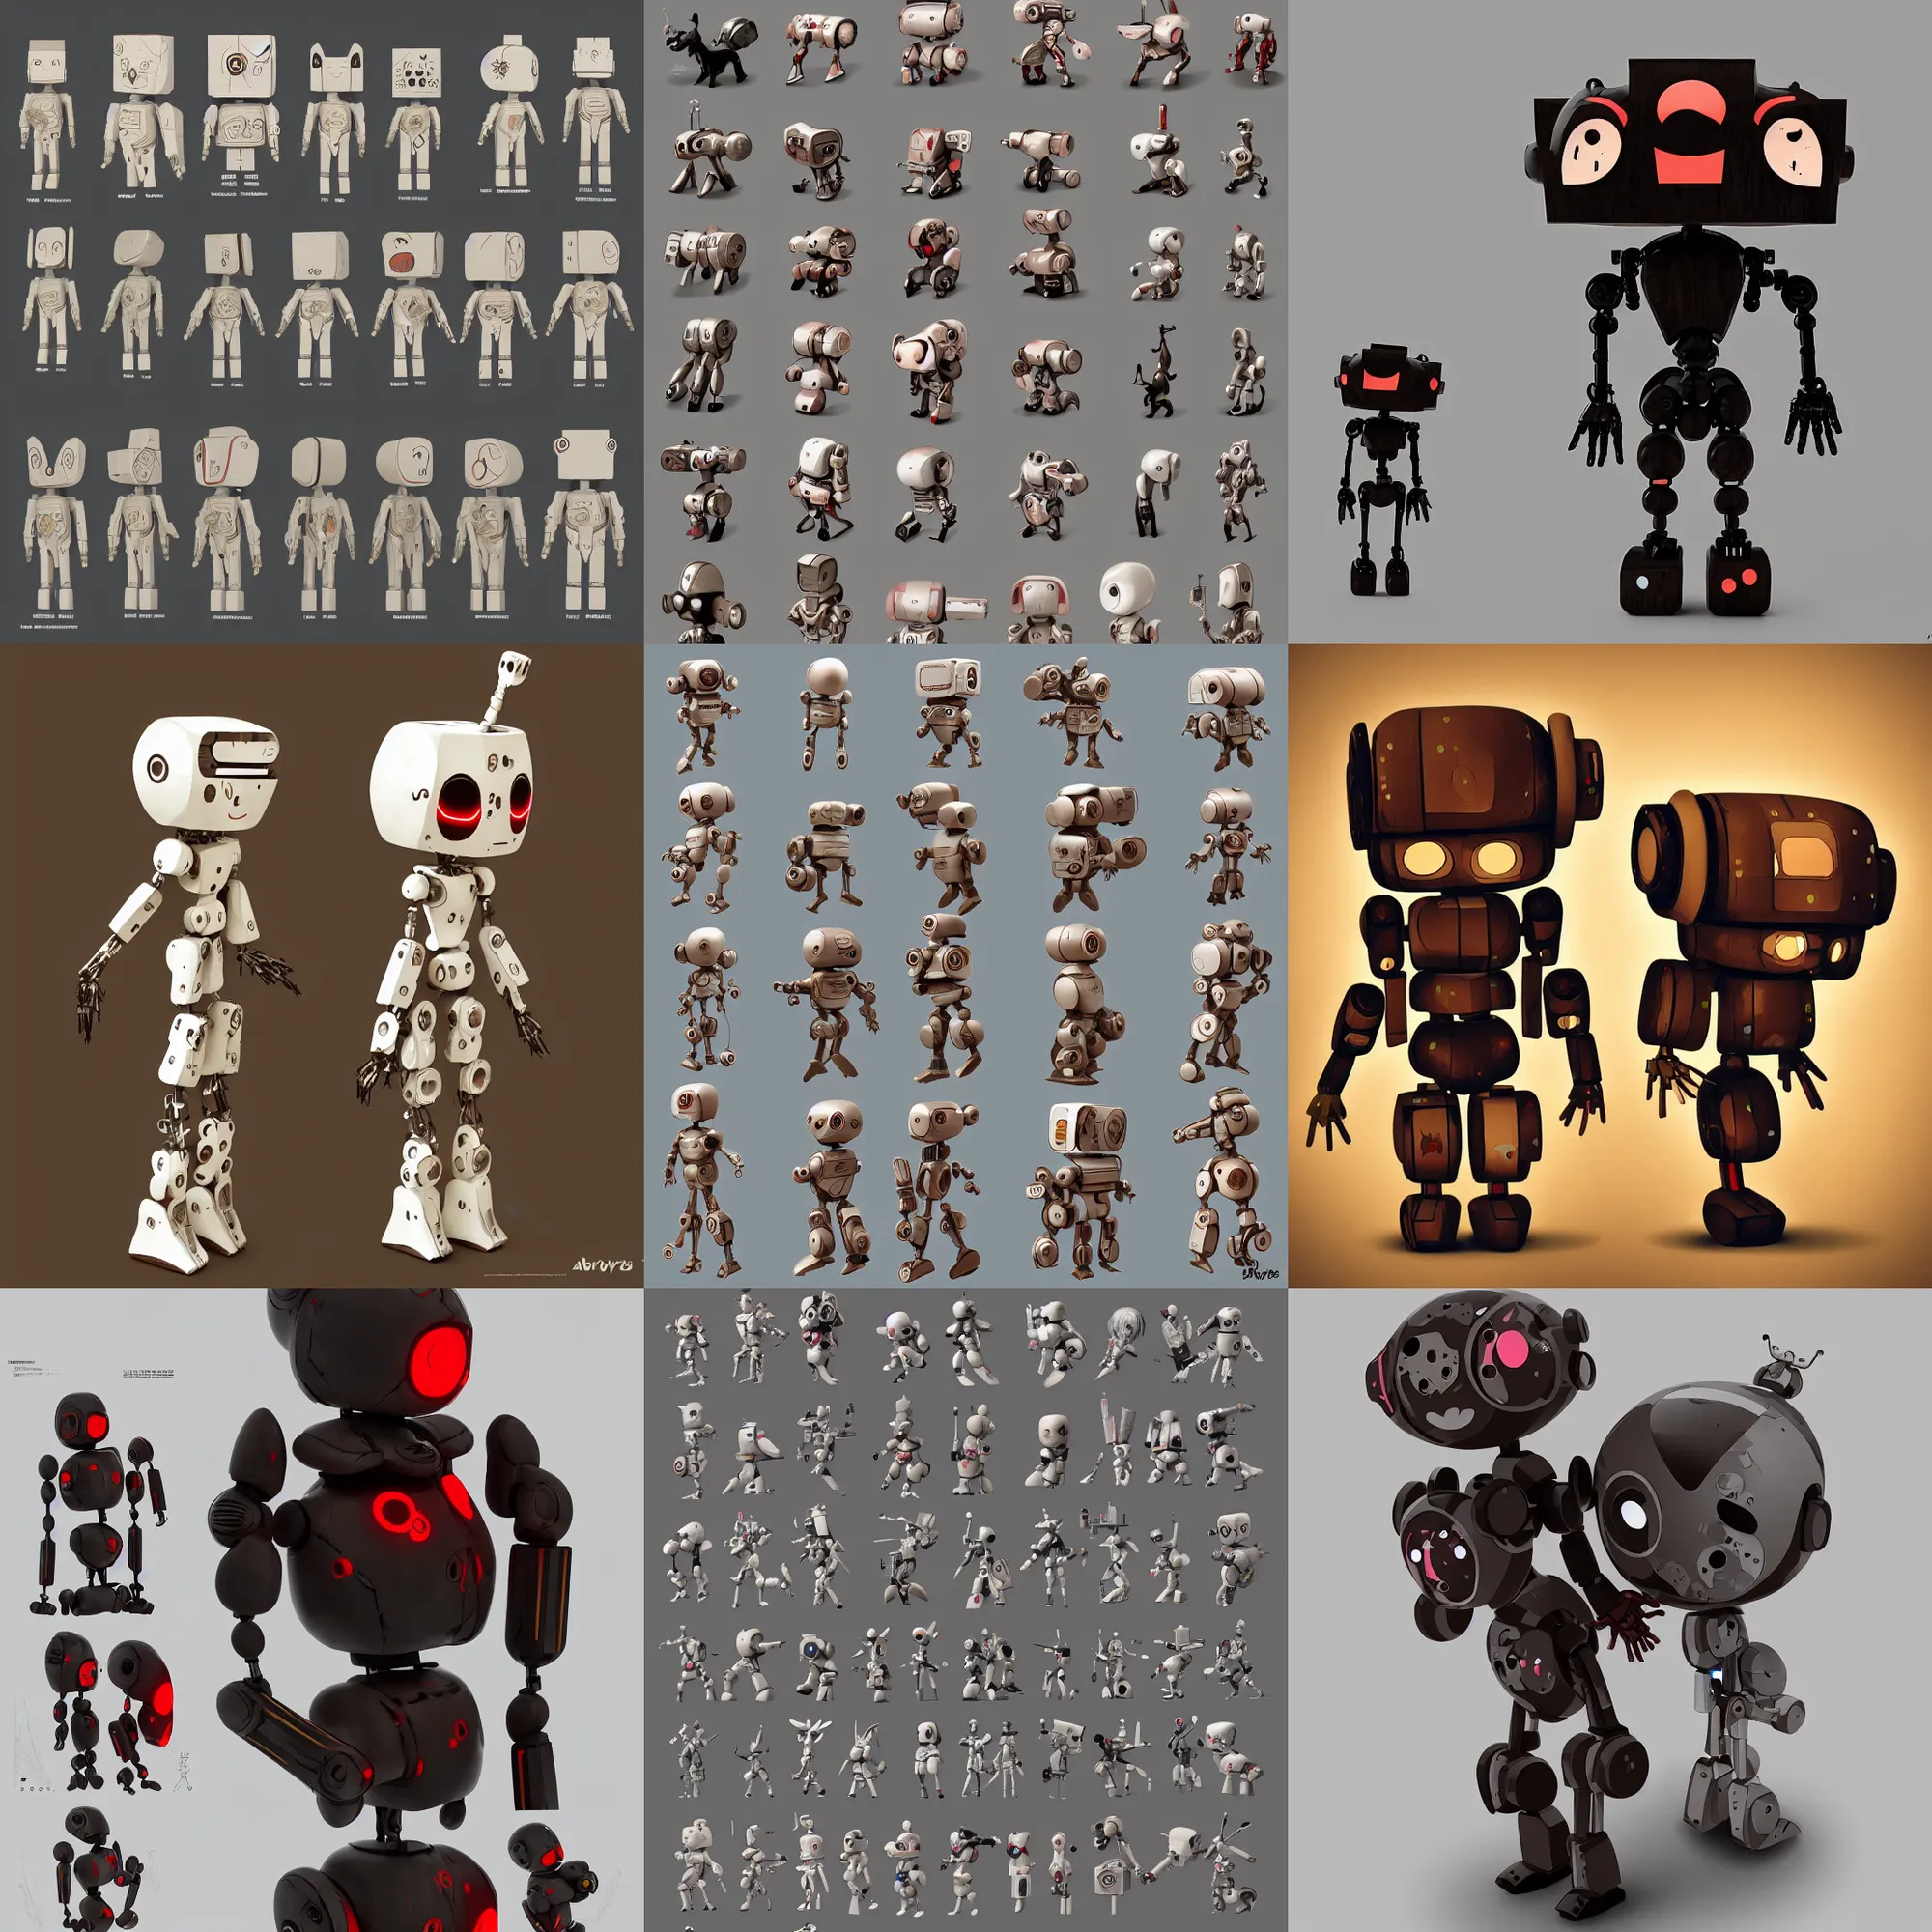 Prompt: illustration artoys cute figurine wooden robots cyberpunk symetrical geometrical cgsociety artstation